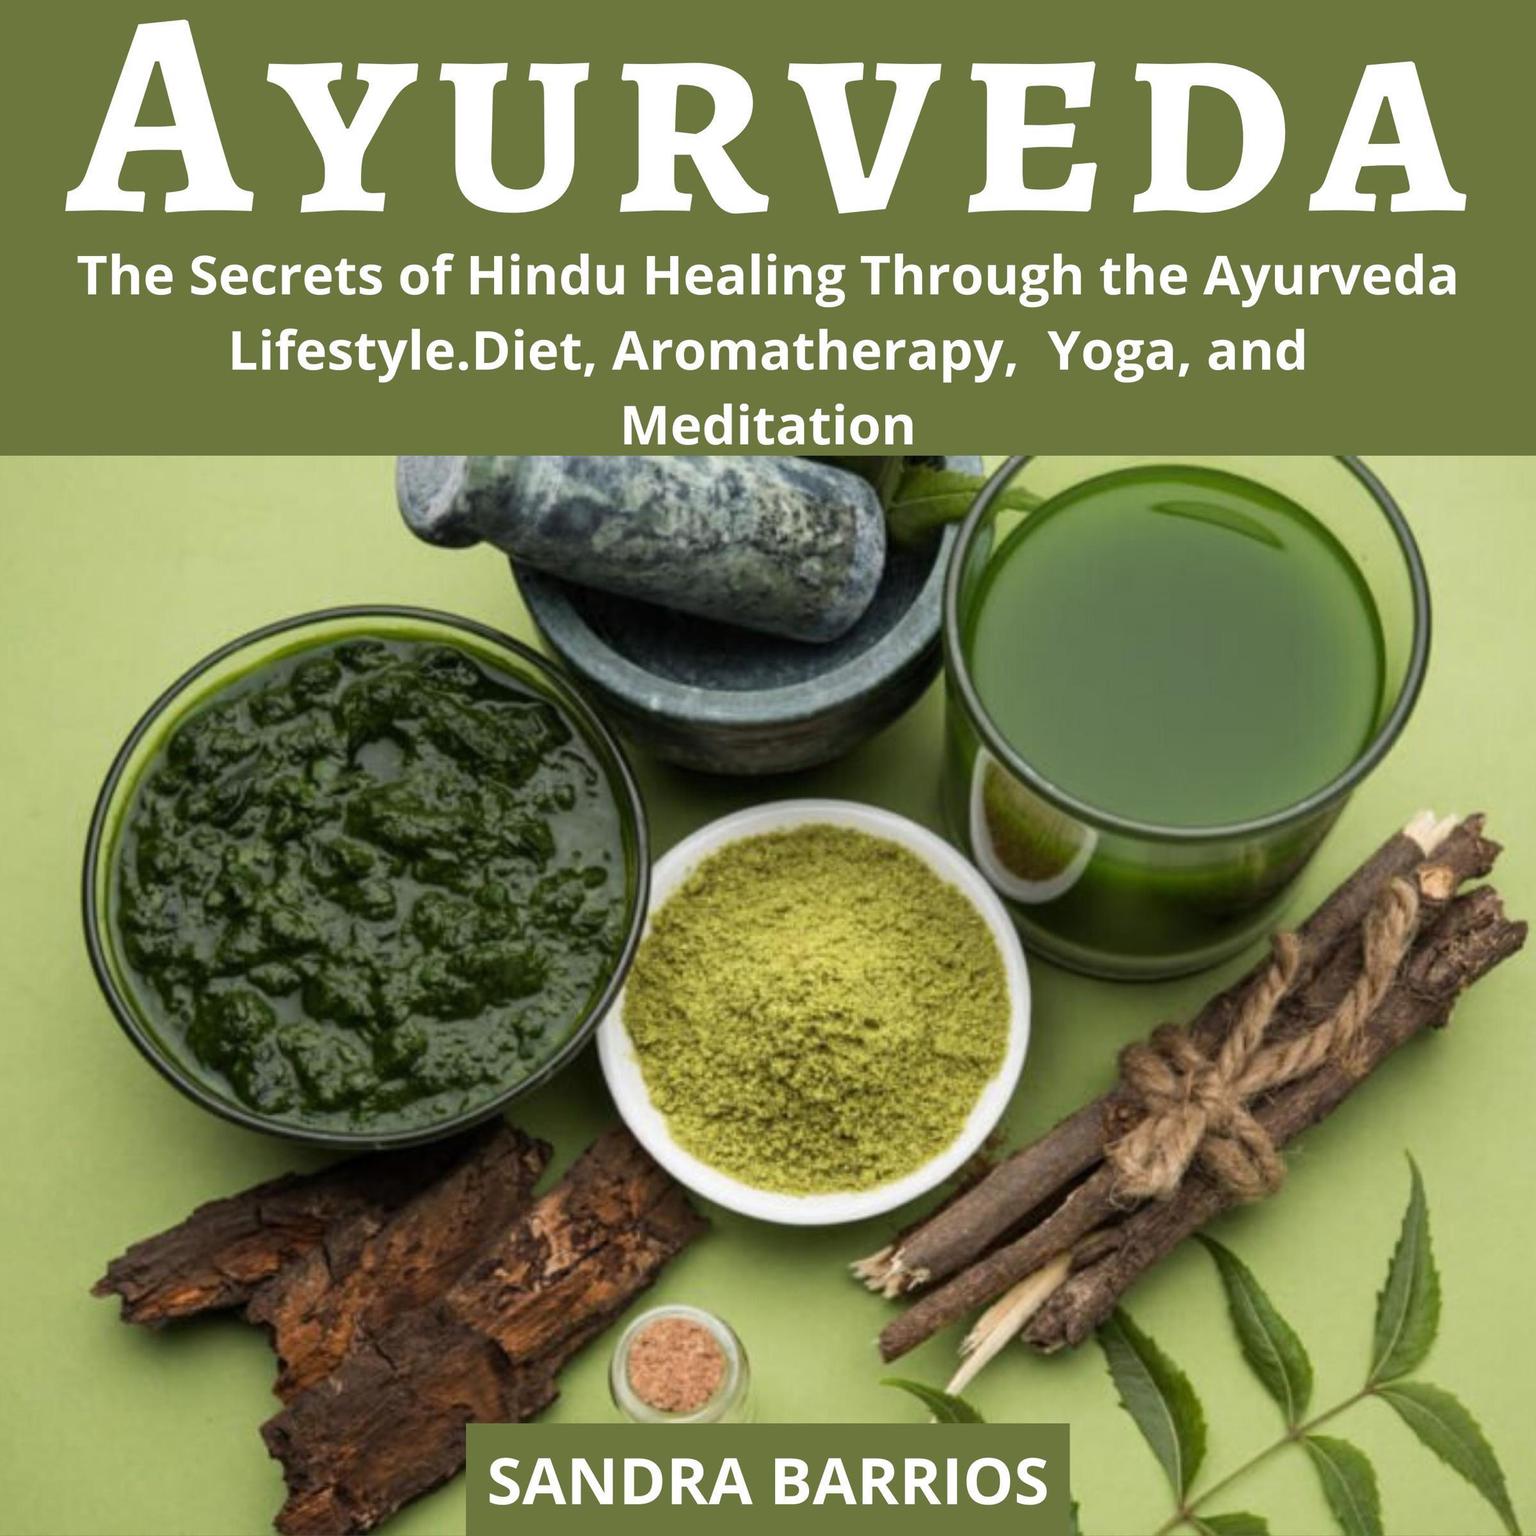 Ayurveda: The Secrets of Hindu Healing Through the Ayurveda Lifestyle: Diet, Aromatherapy, Yoga, and Meditation Audiobook, by Sandra Barrios